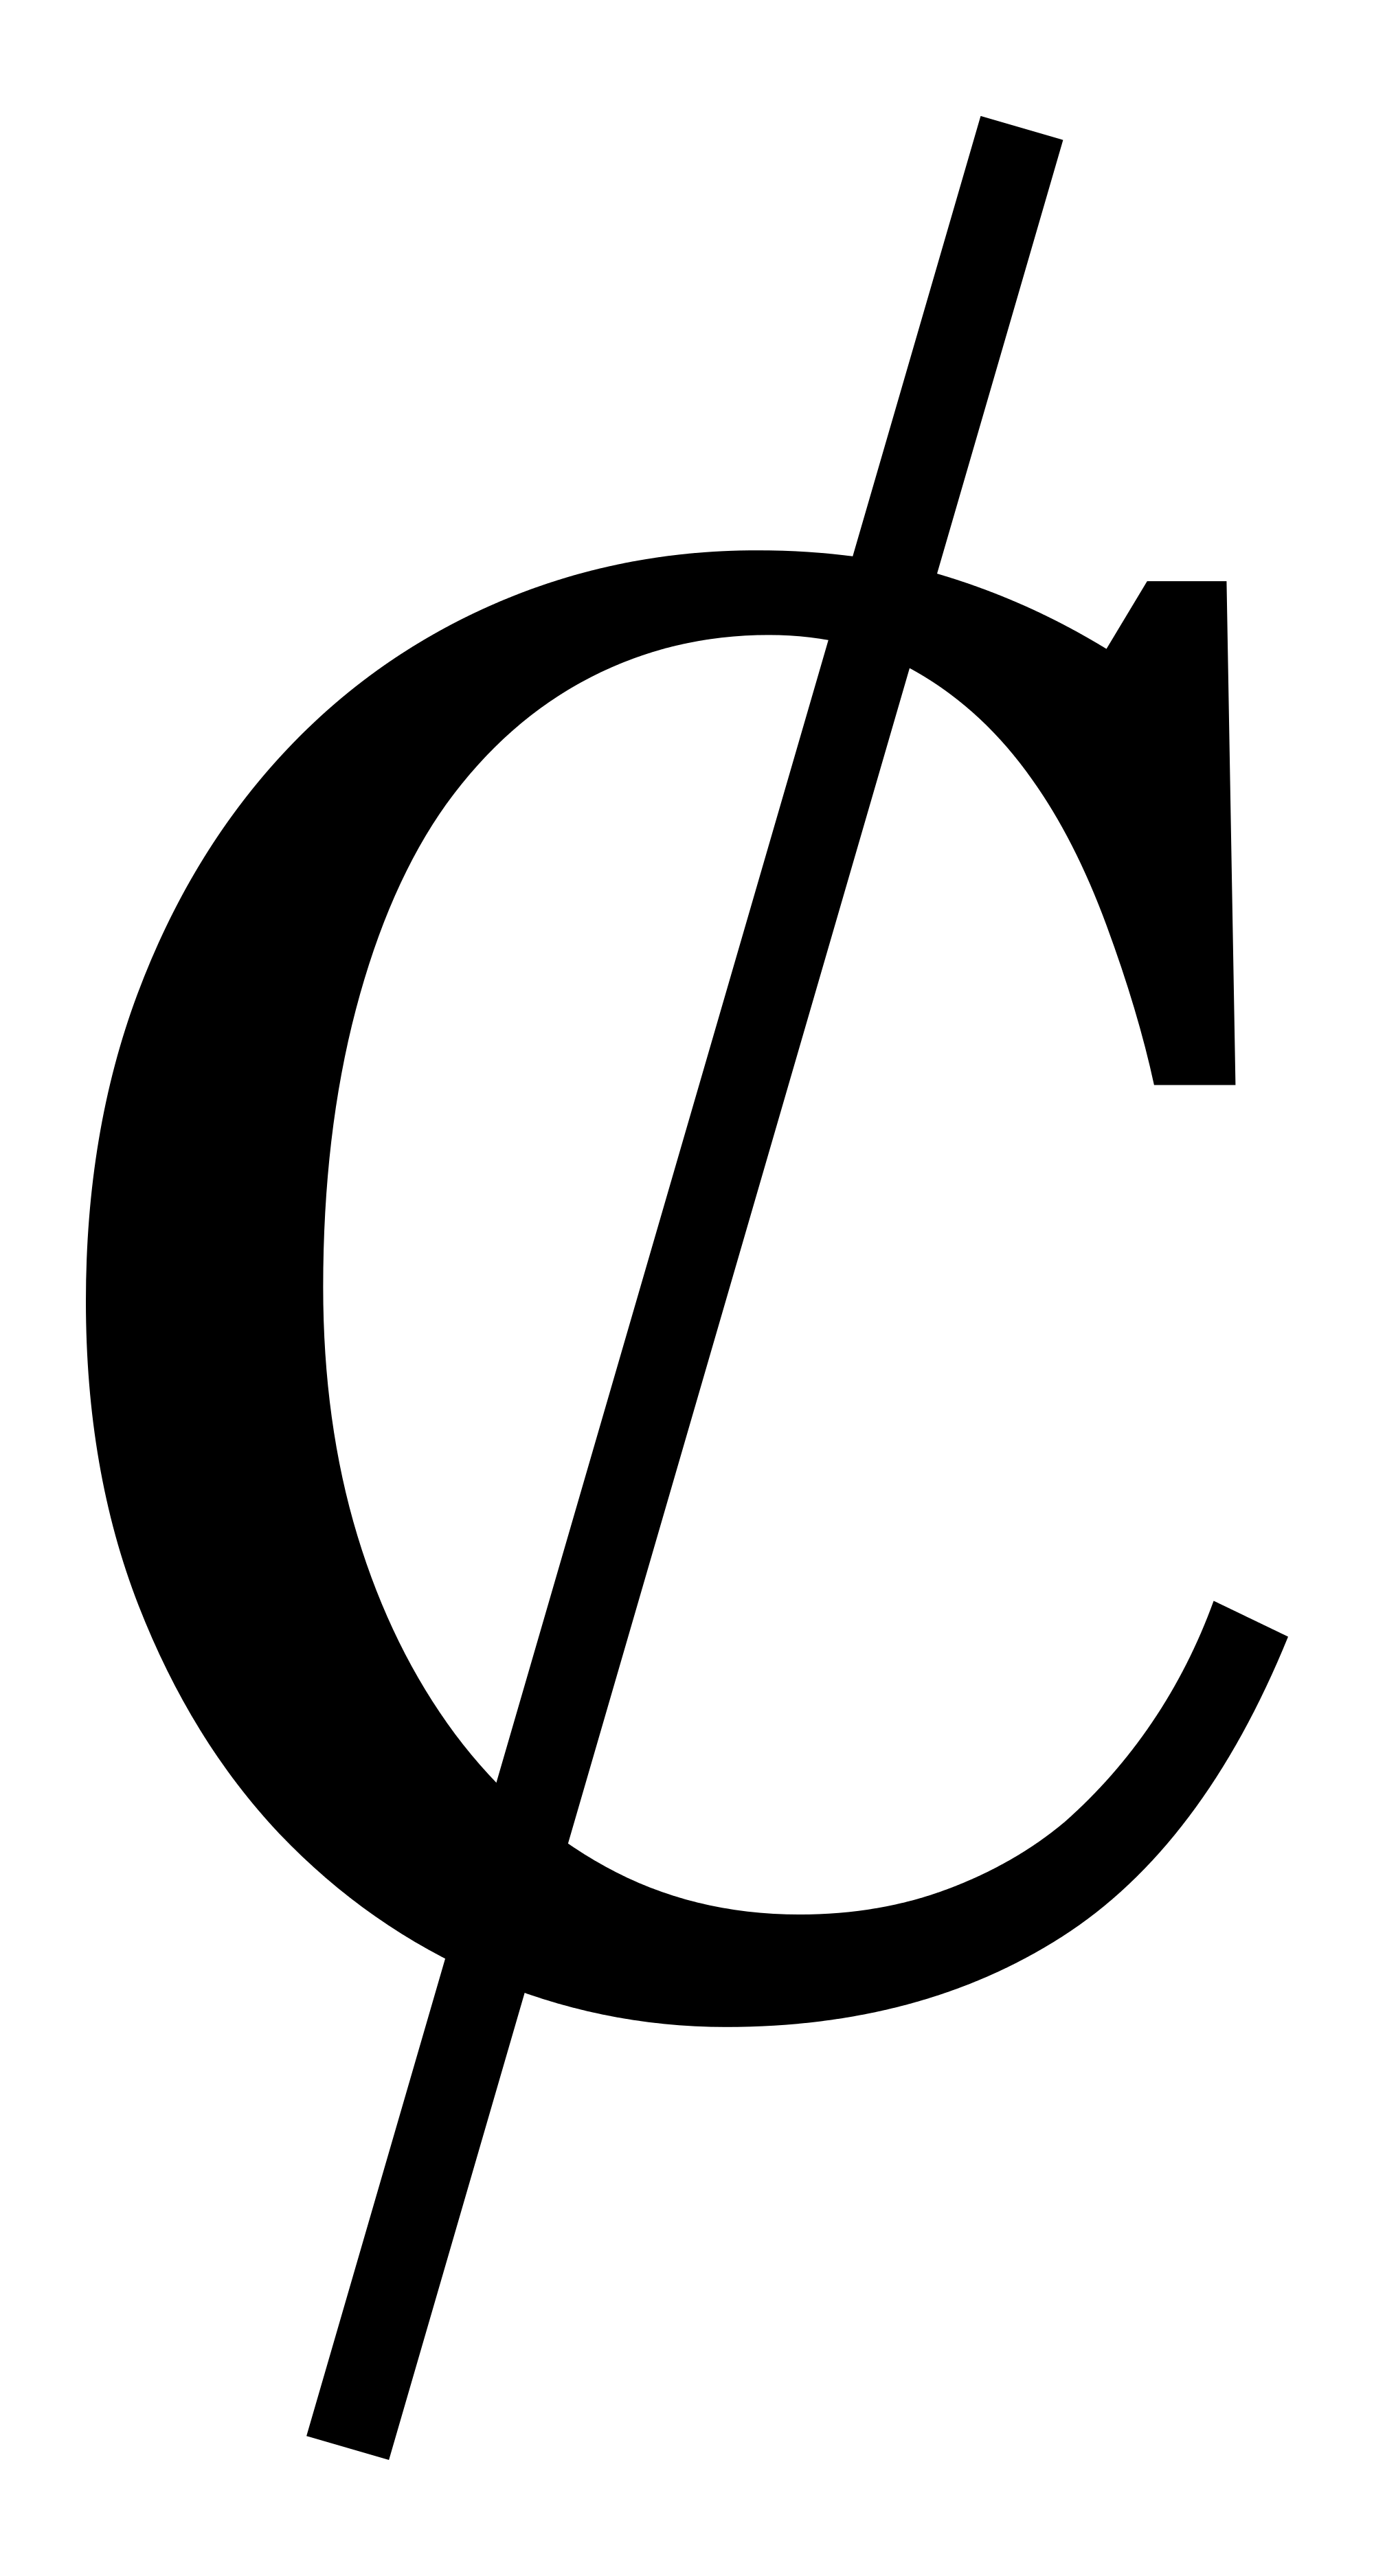 Cent Logo - 5 cents symbol cliparts - AbeonCliparts | Cliparts & Vectors